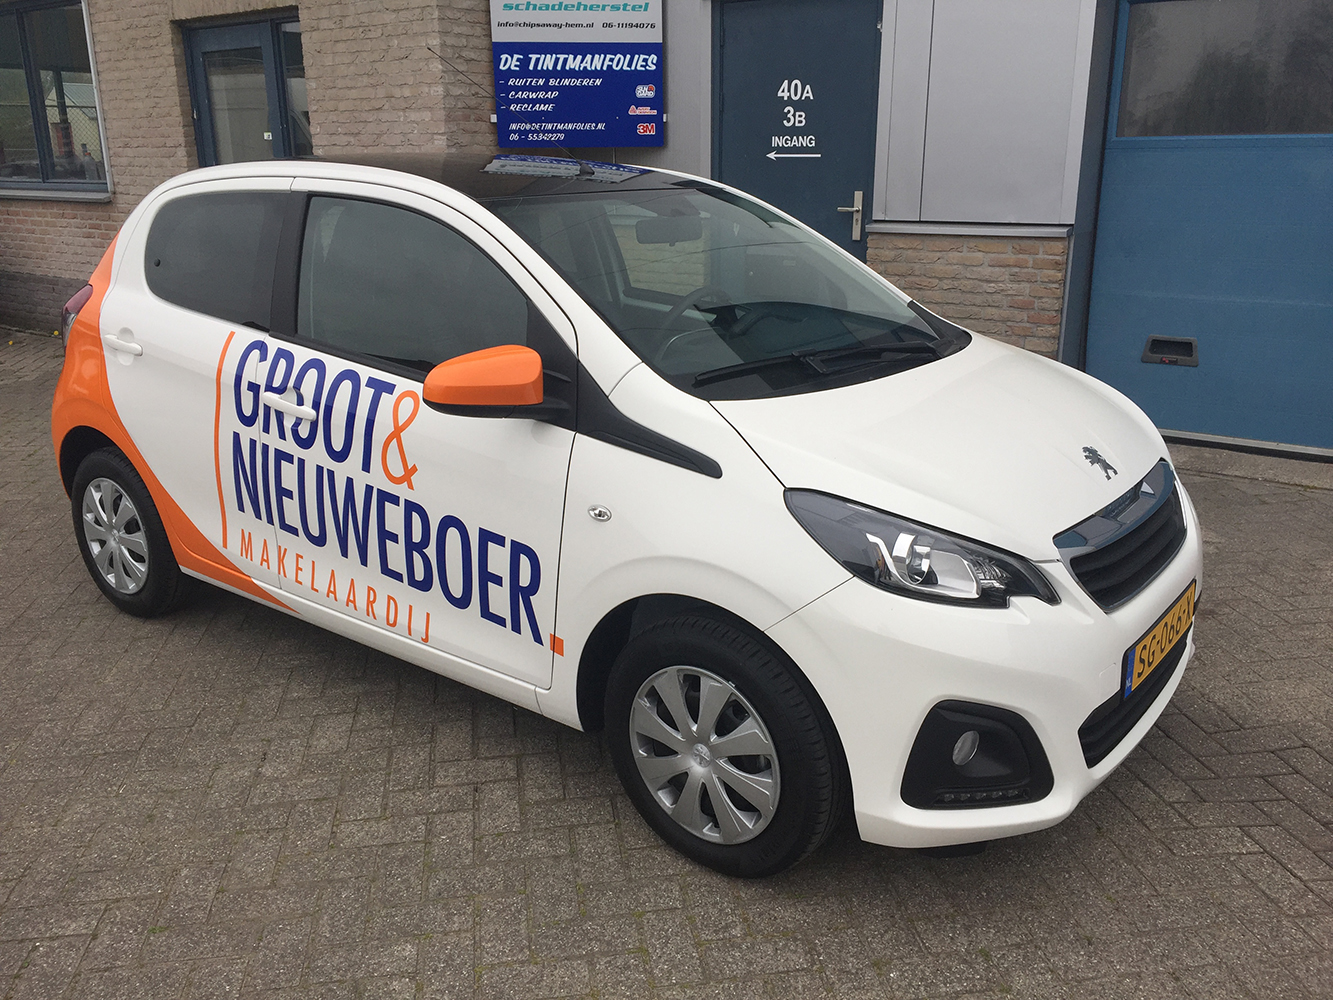 Groot & Nieuweboer reclame-3